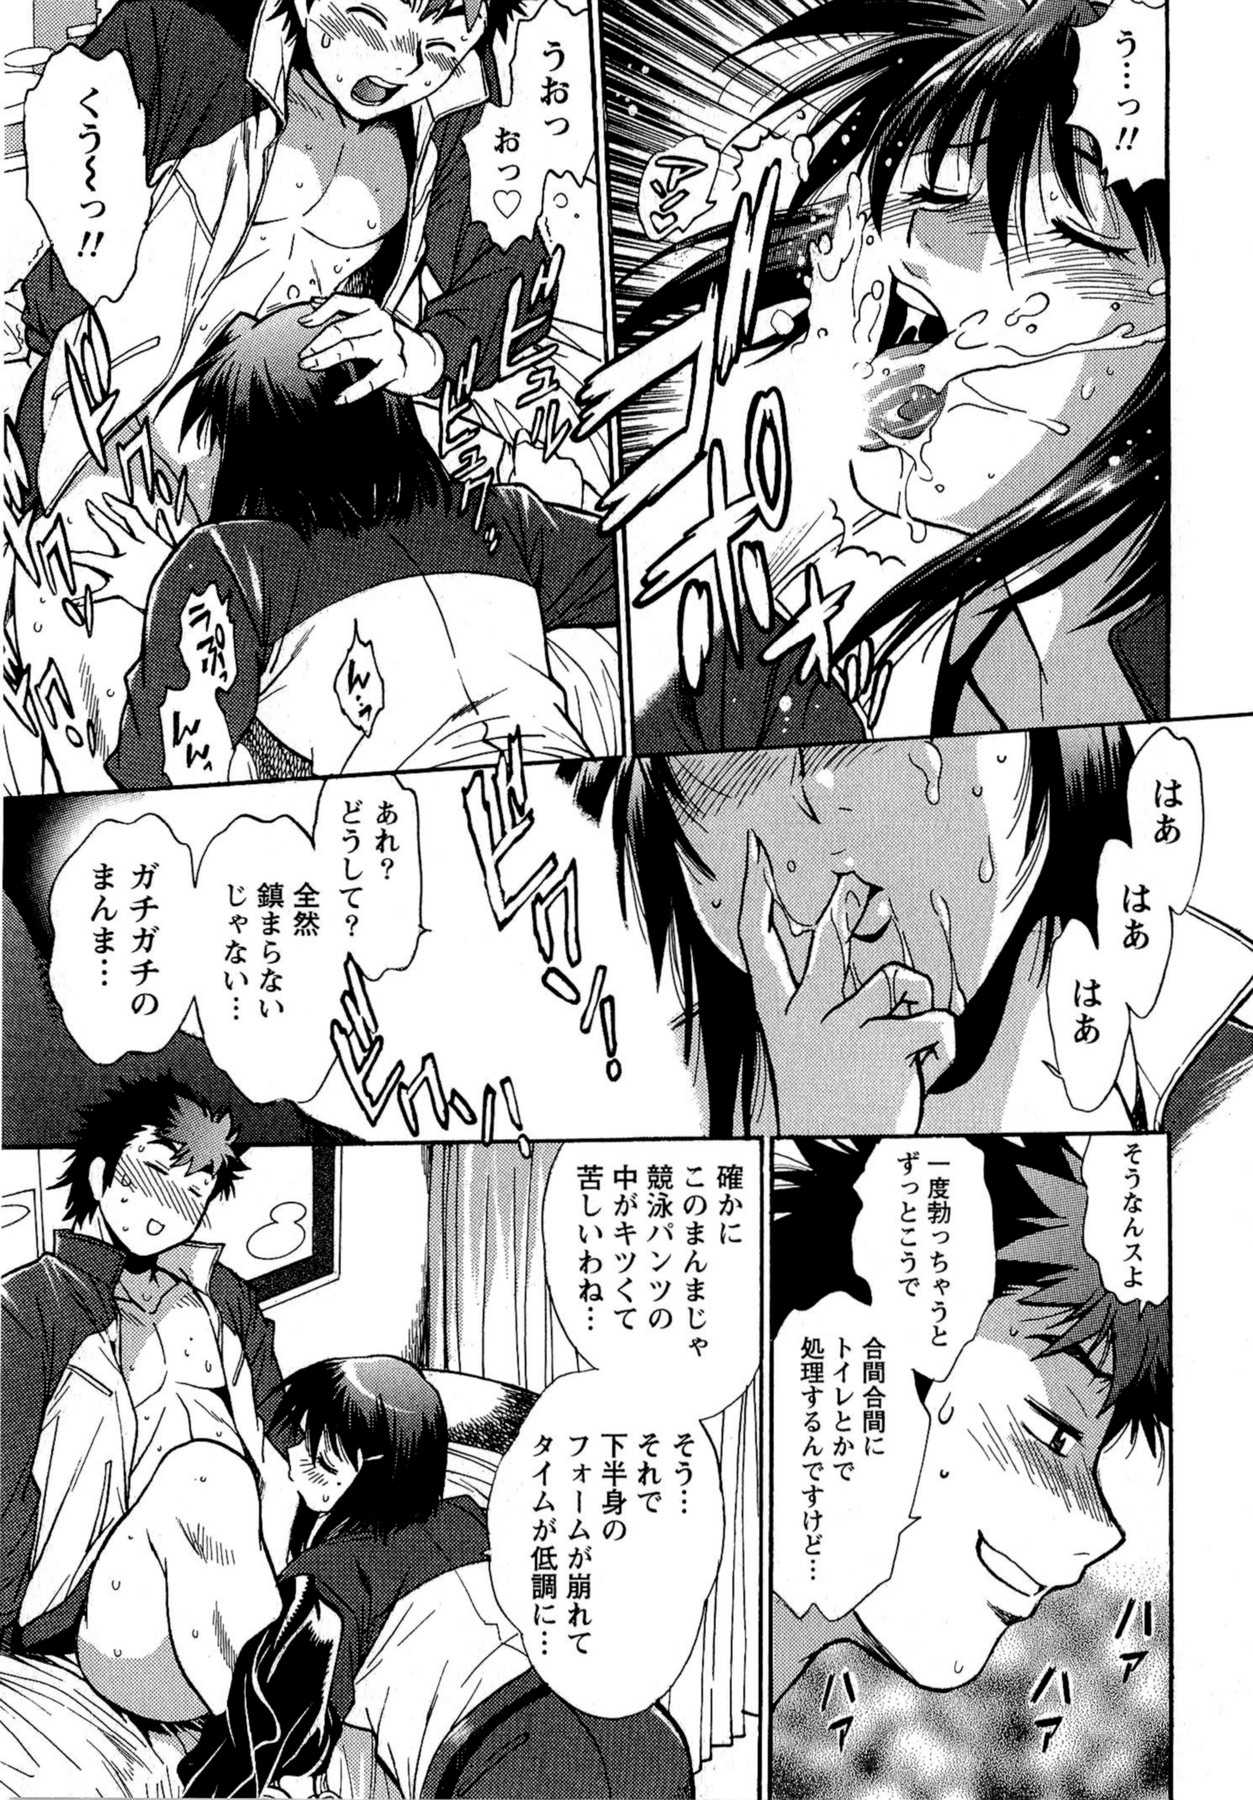 [Manabe Jouji] Kuikomi wo Naoshiteru Hima wa Nai! Vol. 2 [真鍋譲治] くいこみをなおしてるヒマはないっ！ 第02巻